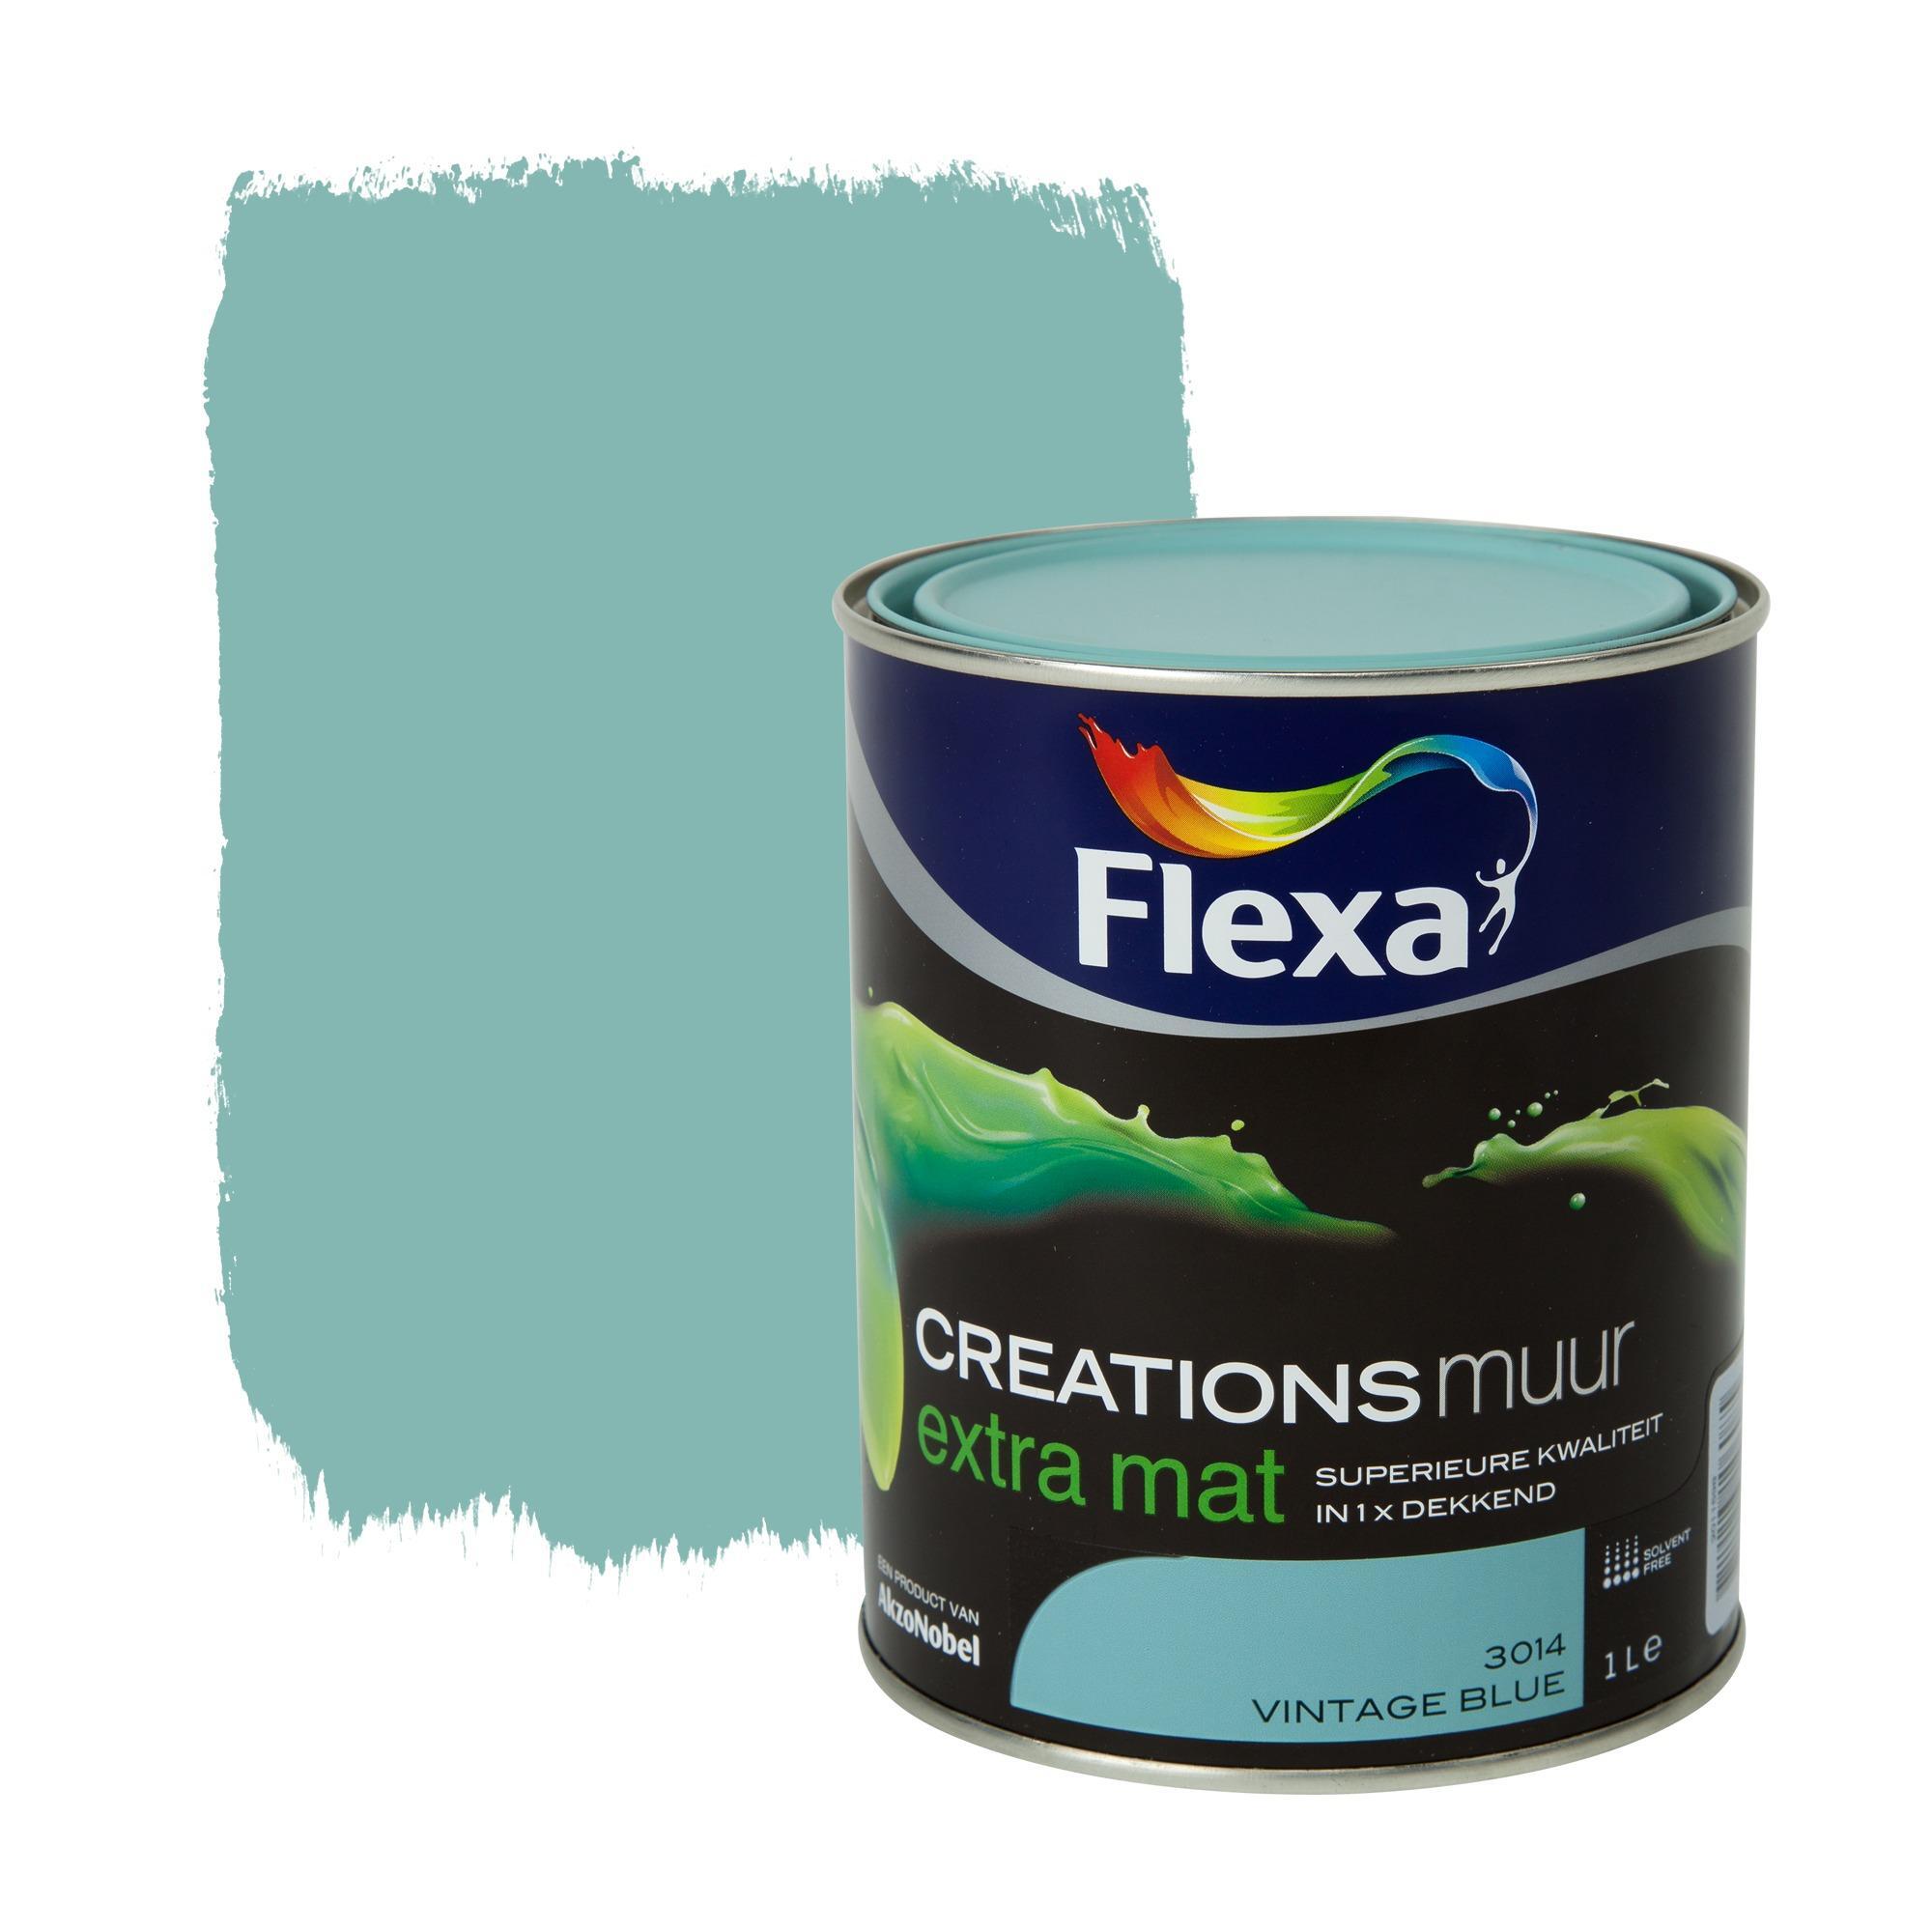 FLEXA Creations muurverf vintage blue extra mat 1 liter